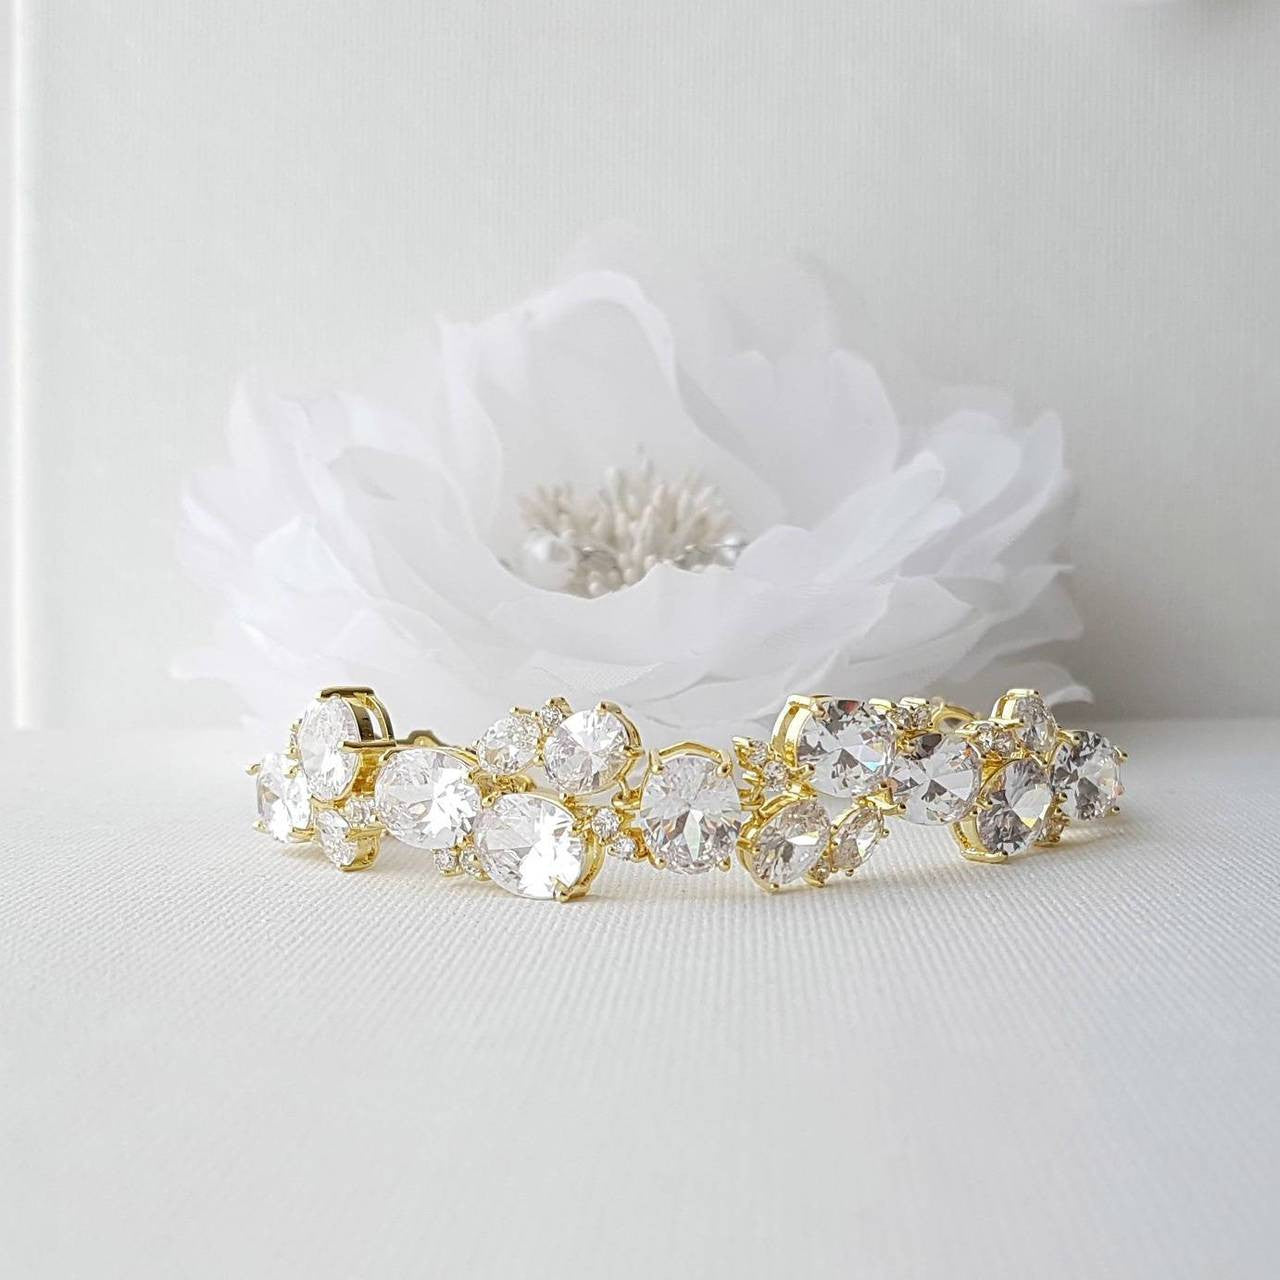 Wedding Crystal Bracelet, Bridal Jewelry, Bridal Bracelet, Rose Gold Bracelet, Gold Wedding Bracelet, Cubic Zirconia Bracelet, Emily